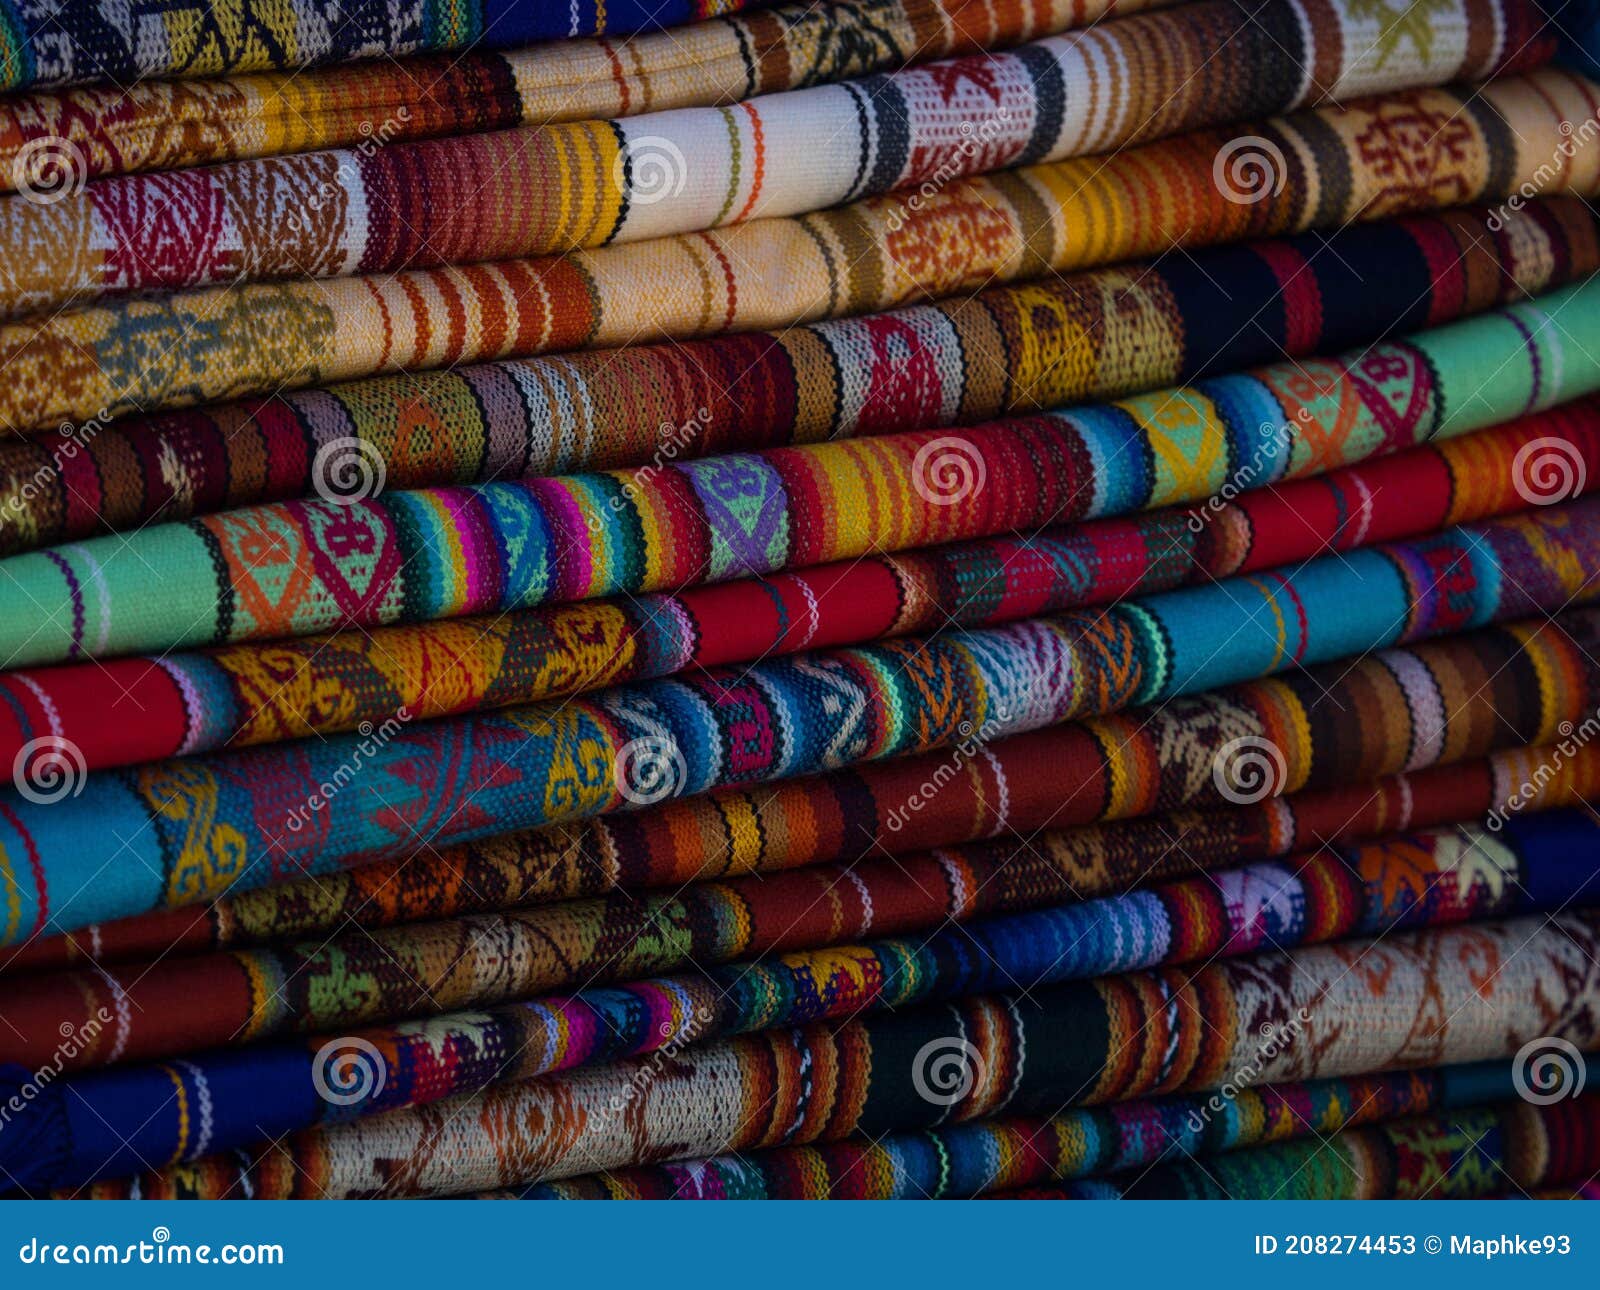 textile pile colorful traditional andean indigenous handmade woven otavalo handicraft market ecuador south america